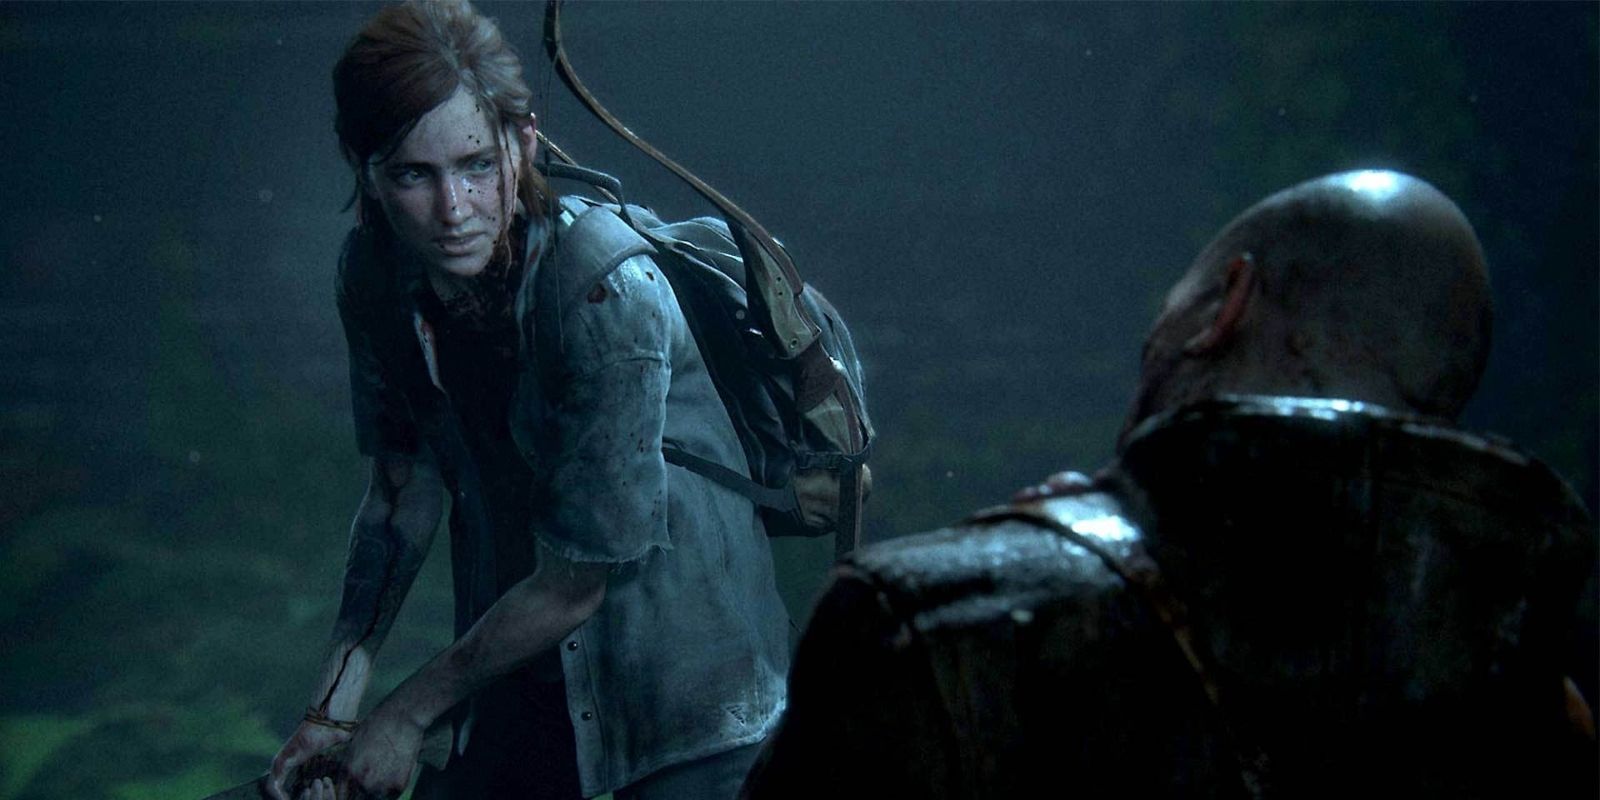 Ellie staring down an enemy in The Last of Us Part II